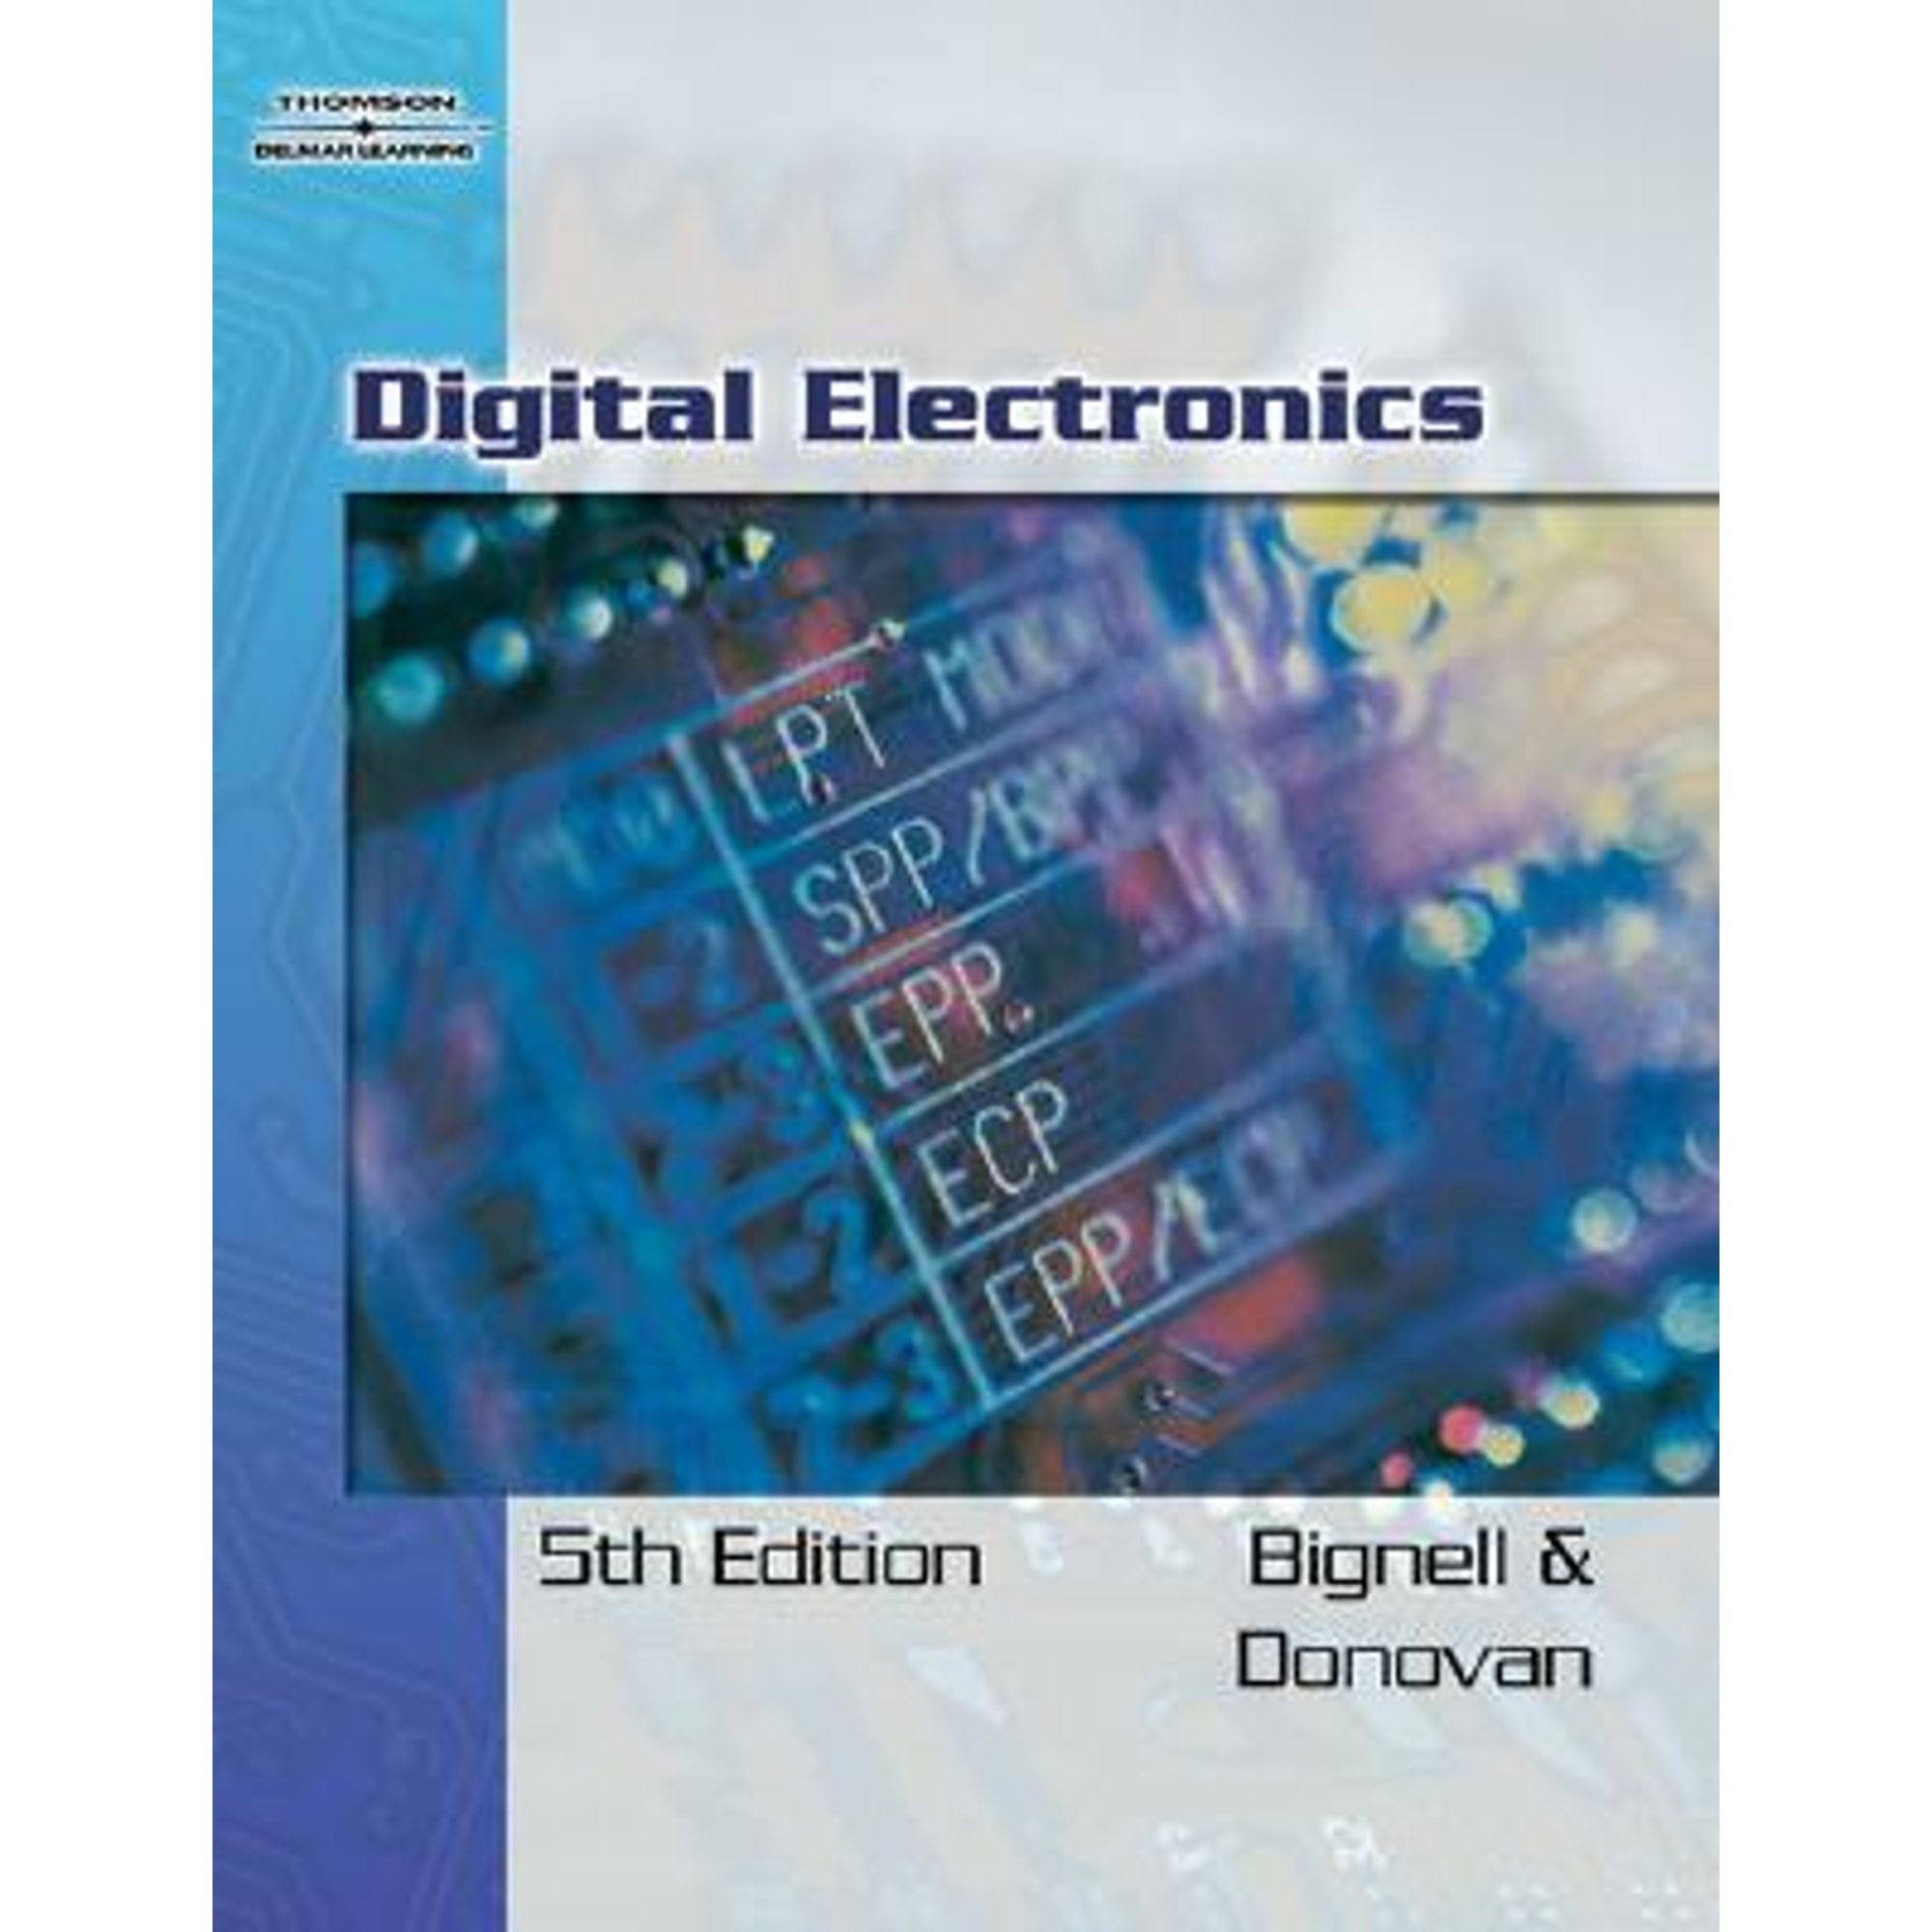 DIGITAL ELECTRONICS By James Bignell & Robert Donovan - Hardcover